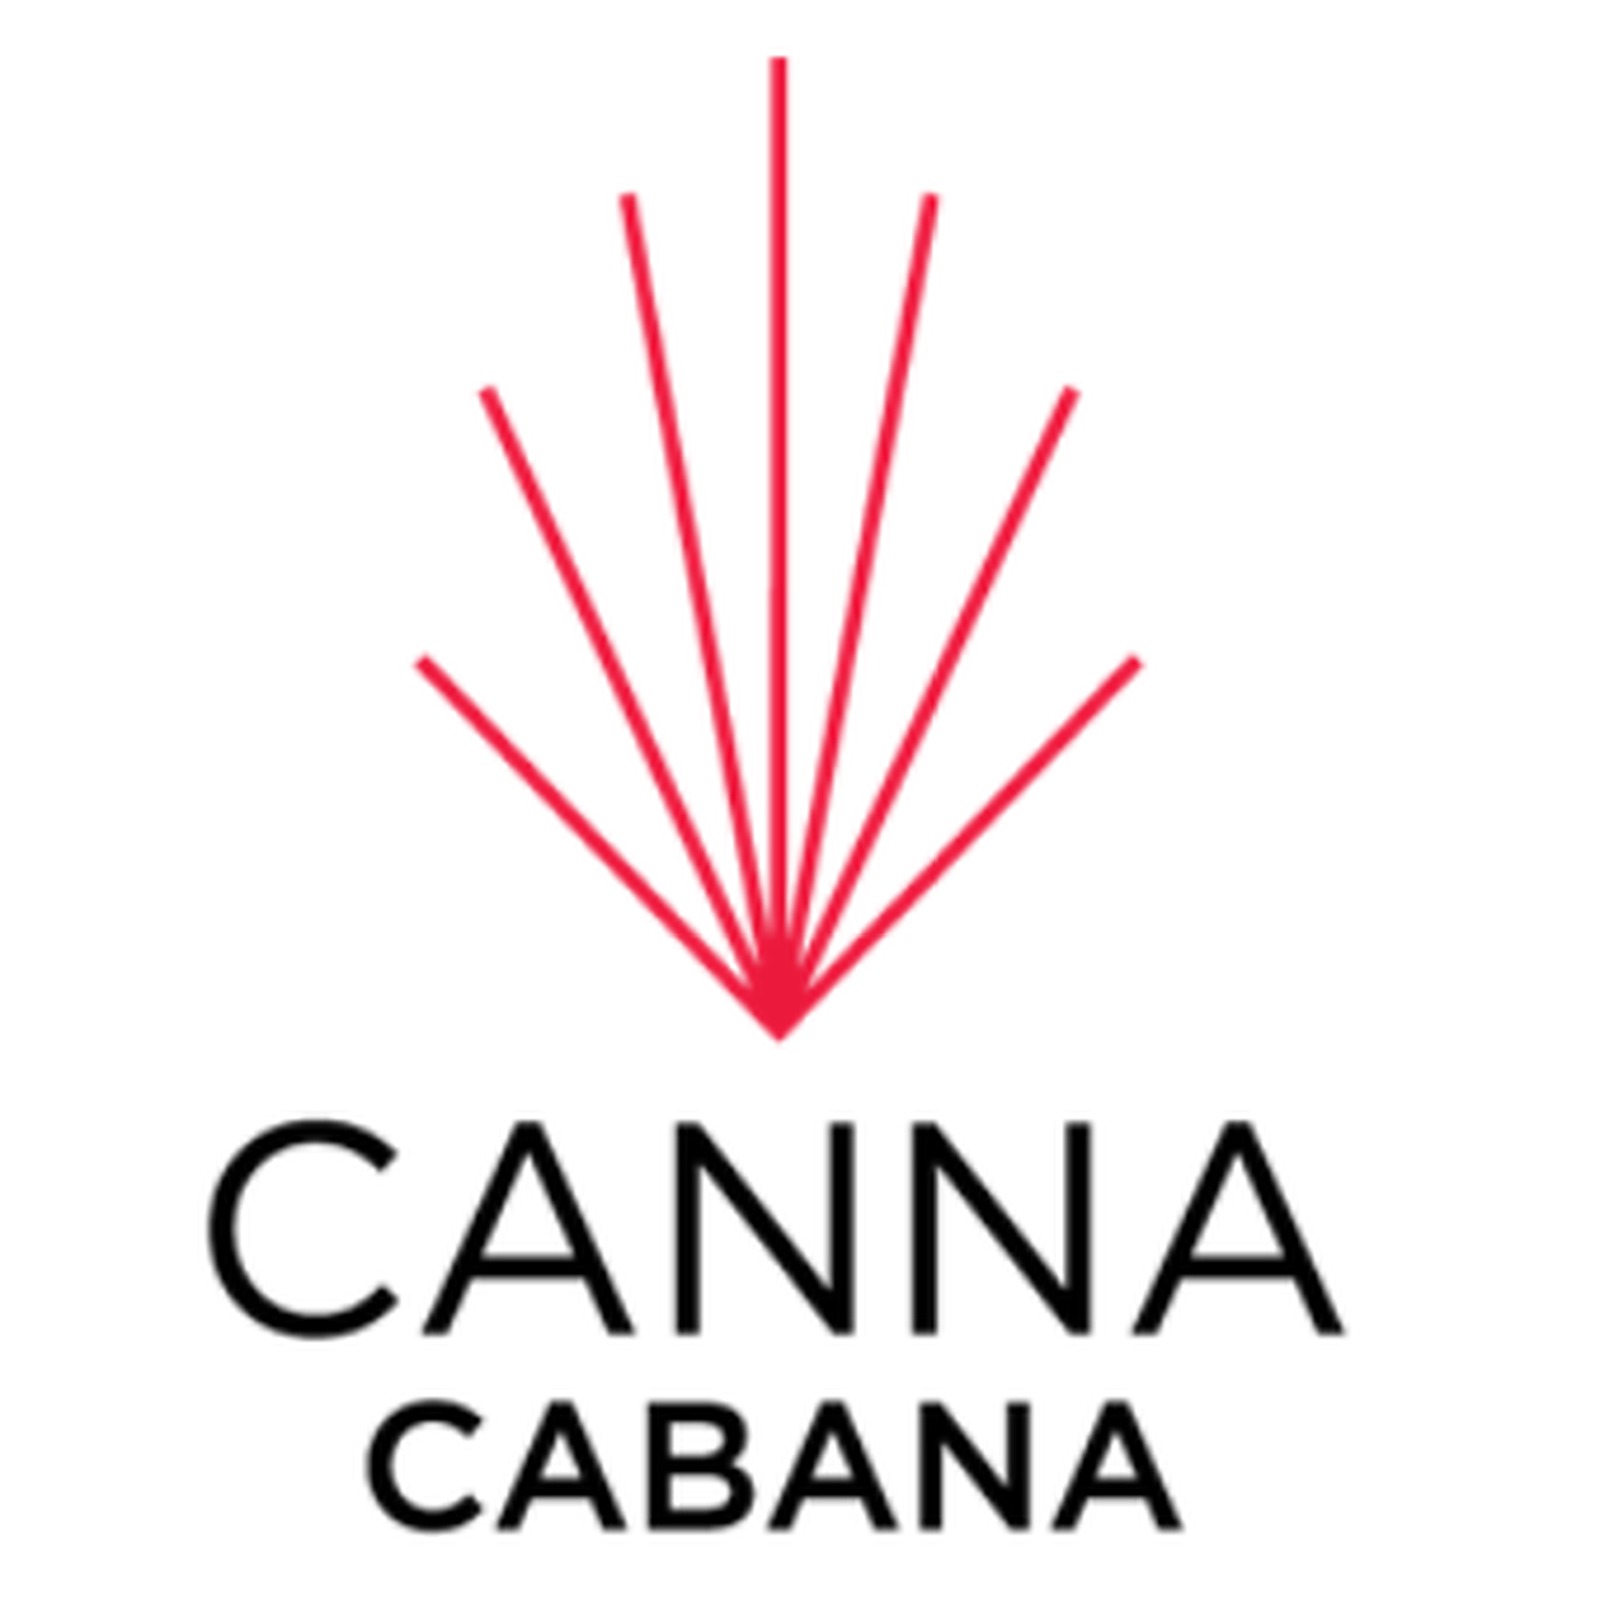 Canna Cabana | Grant | Cannabis Store Winnipeg logo